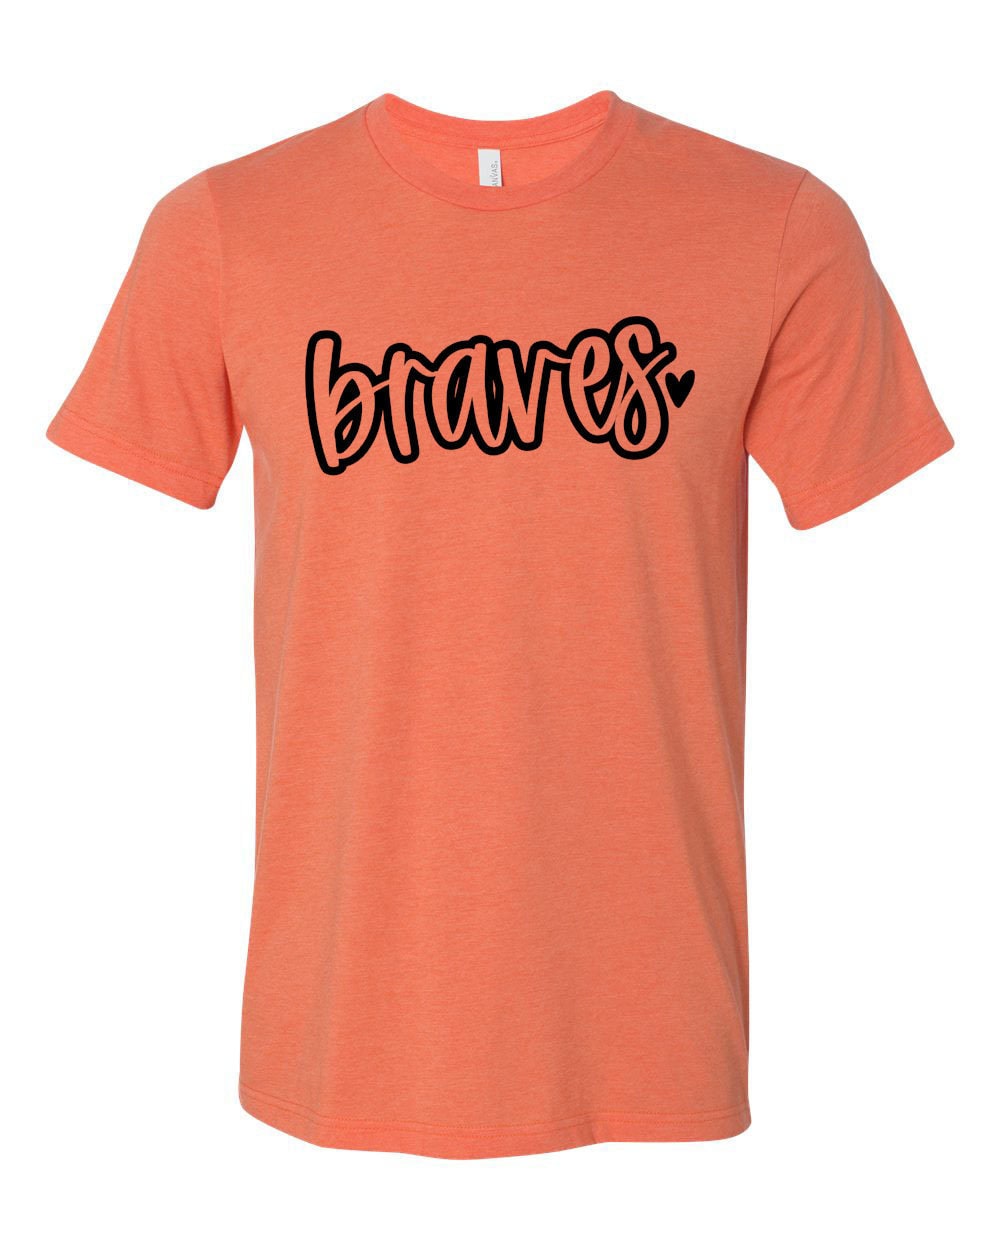 braves shirts womens